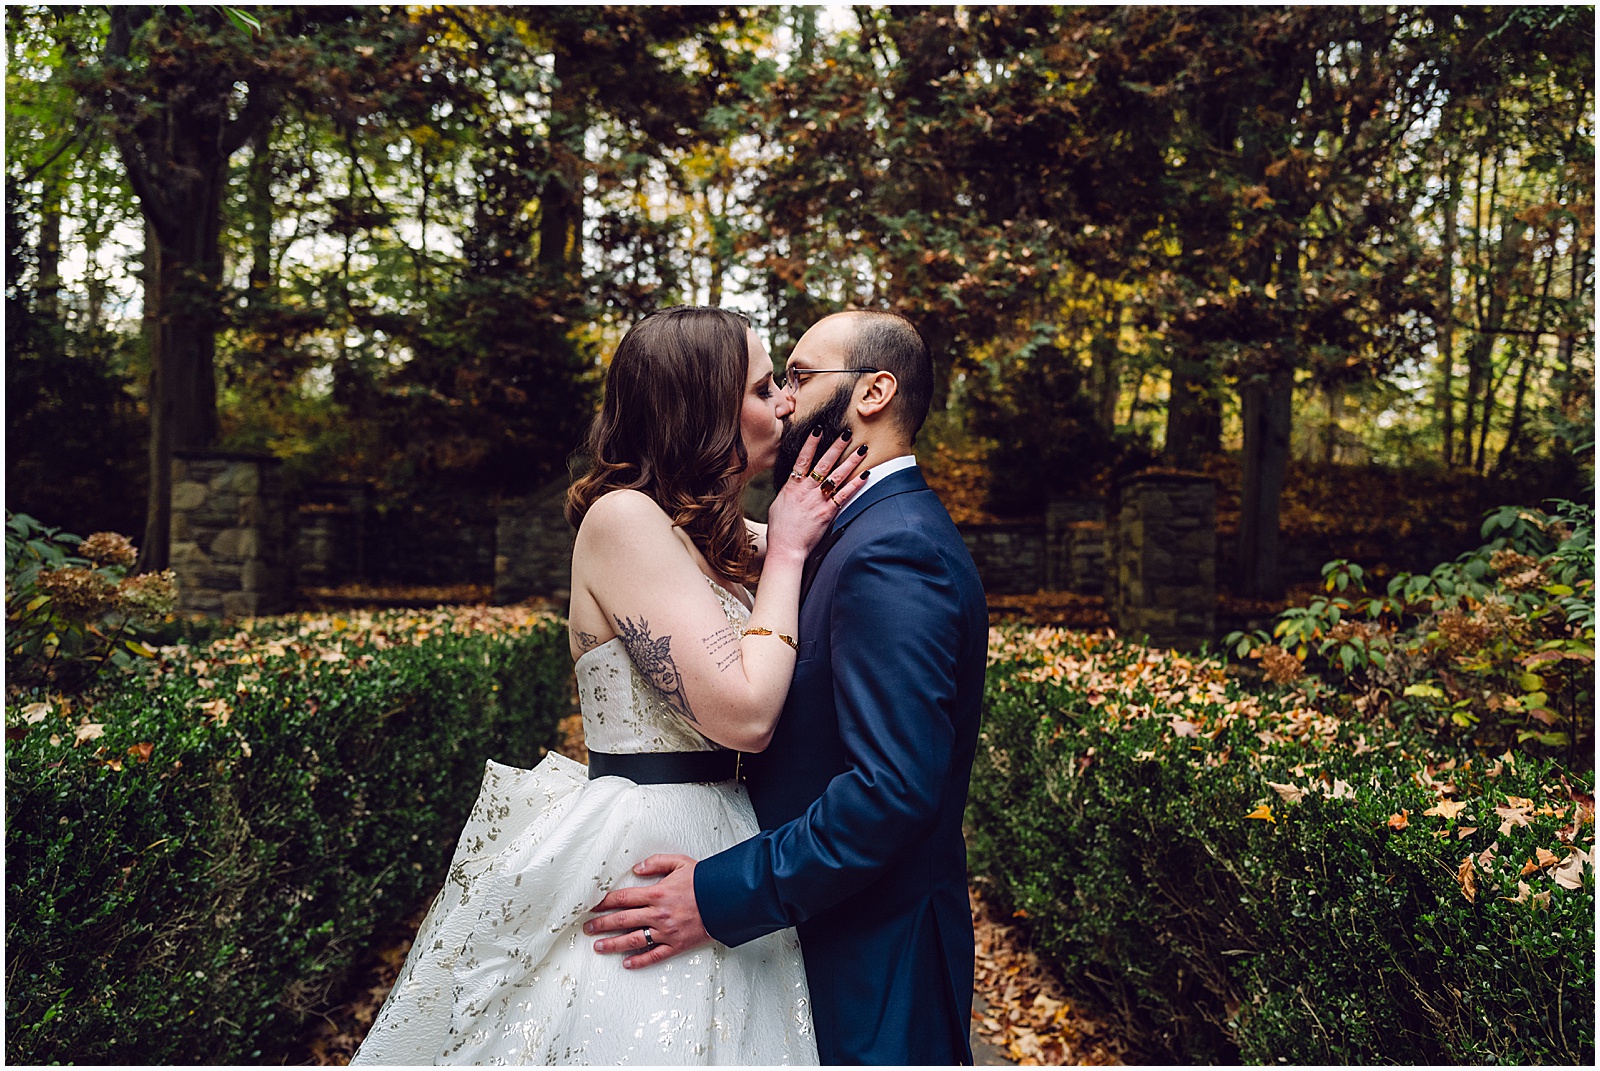 A bride and groom kiss on a garden path at a Philadelphia wedding venue.